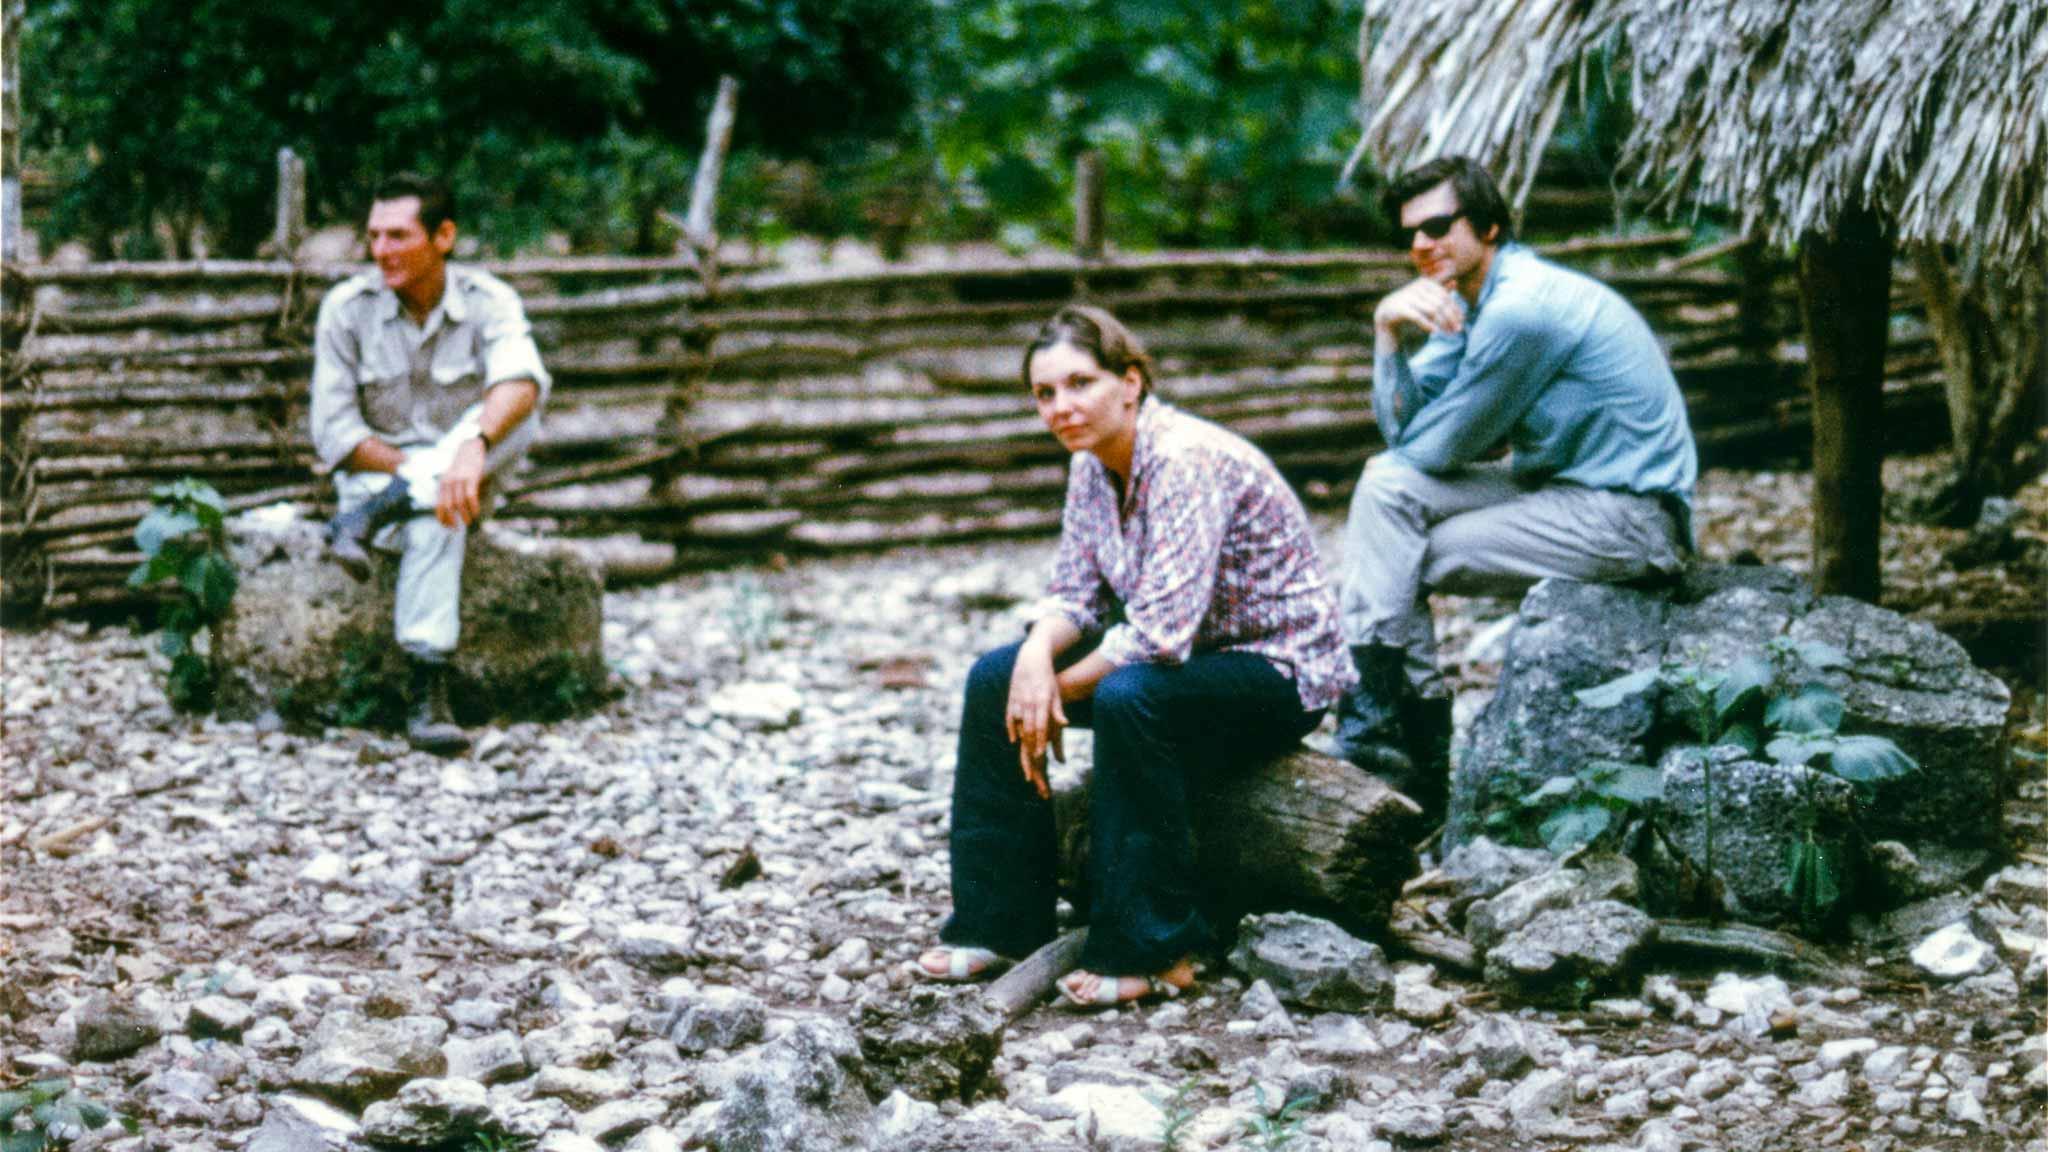 Three figures sitting on rocks in the yucatan